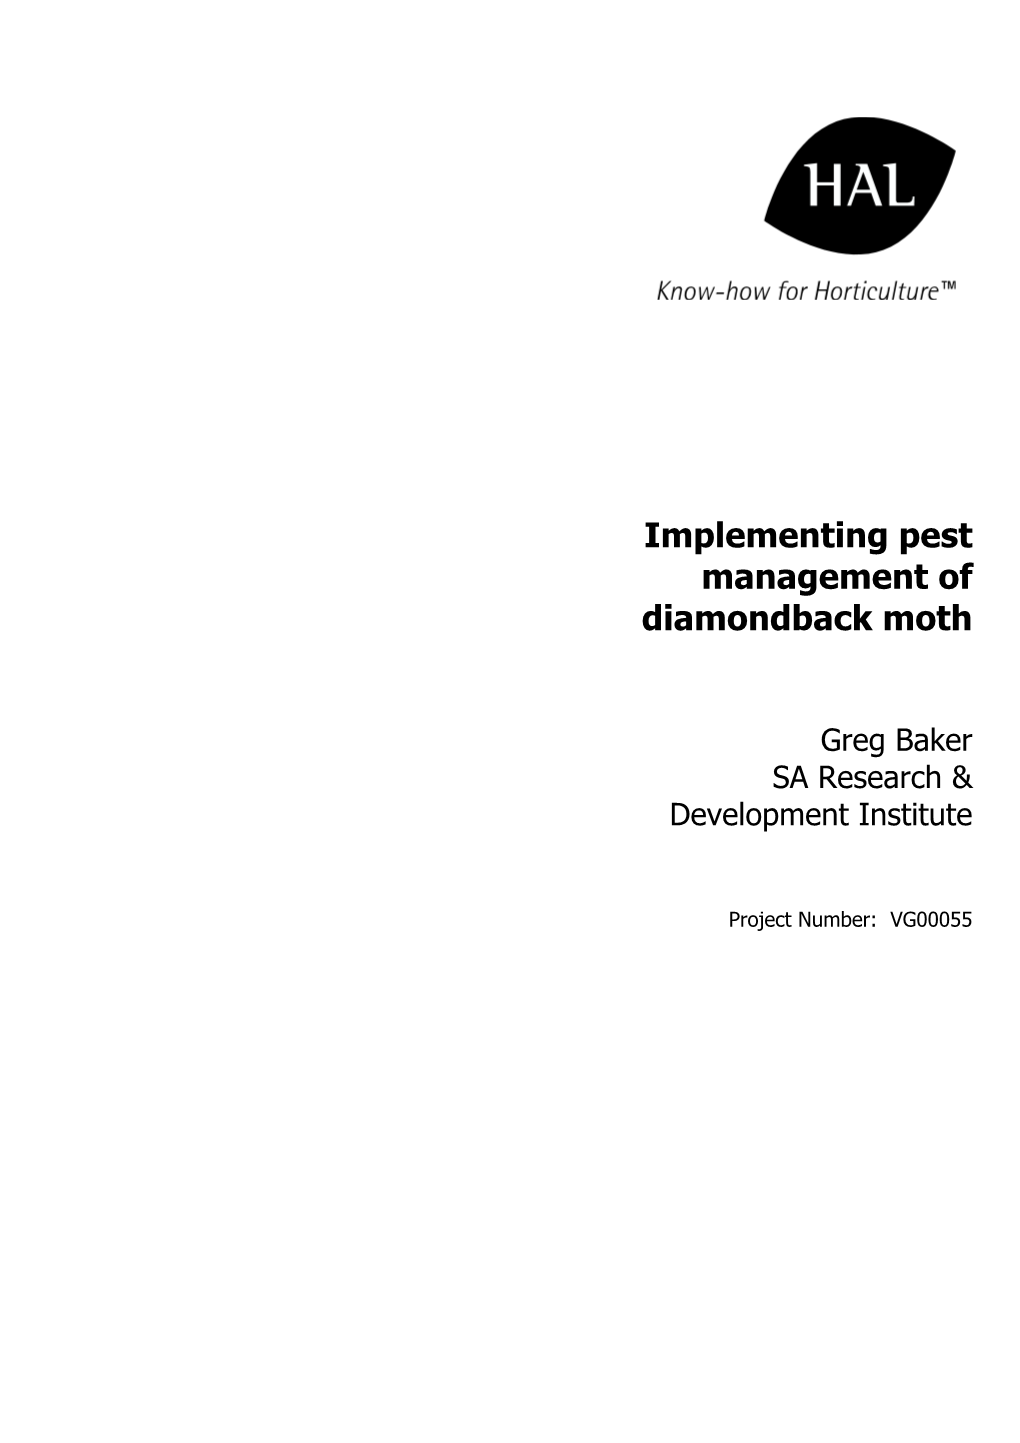 Implementing Pest Management of Diamondback Moth